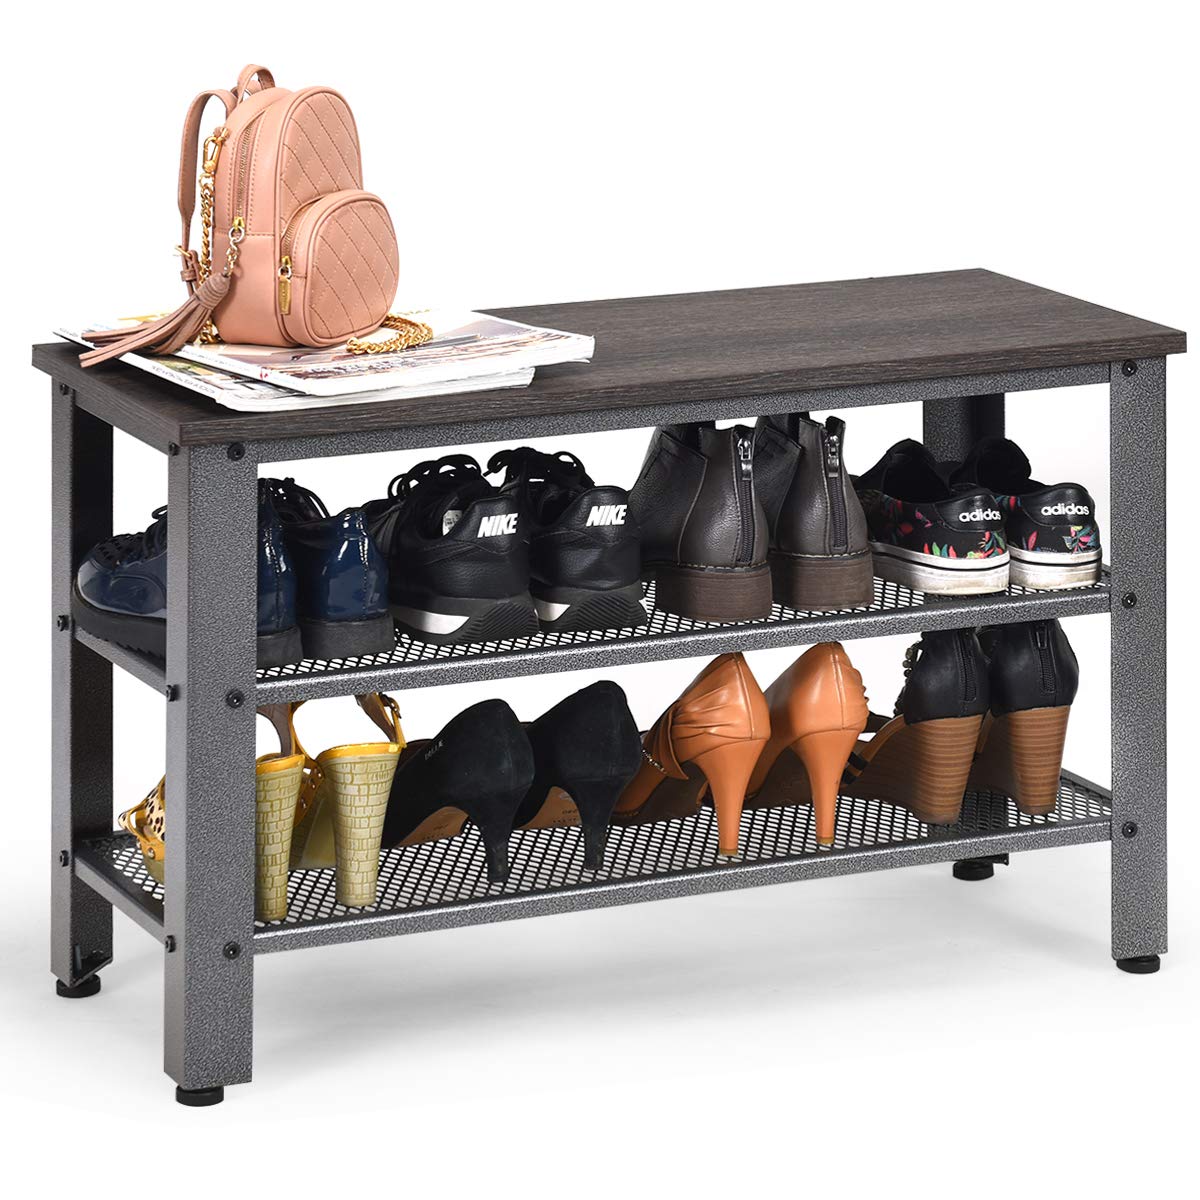 Giantex 3-Tier Shoe Bench, Industrial Shoe Rack with 2 Mesh Storage Shelves